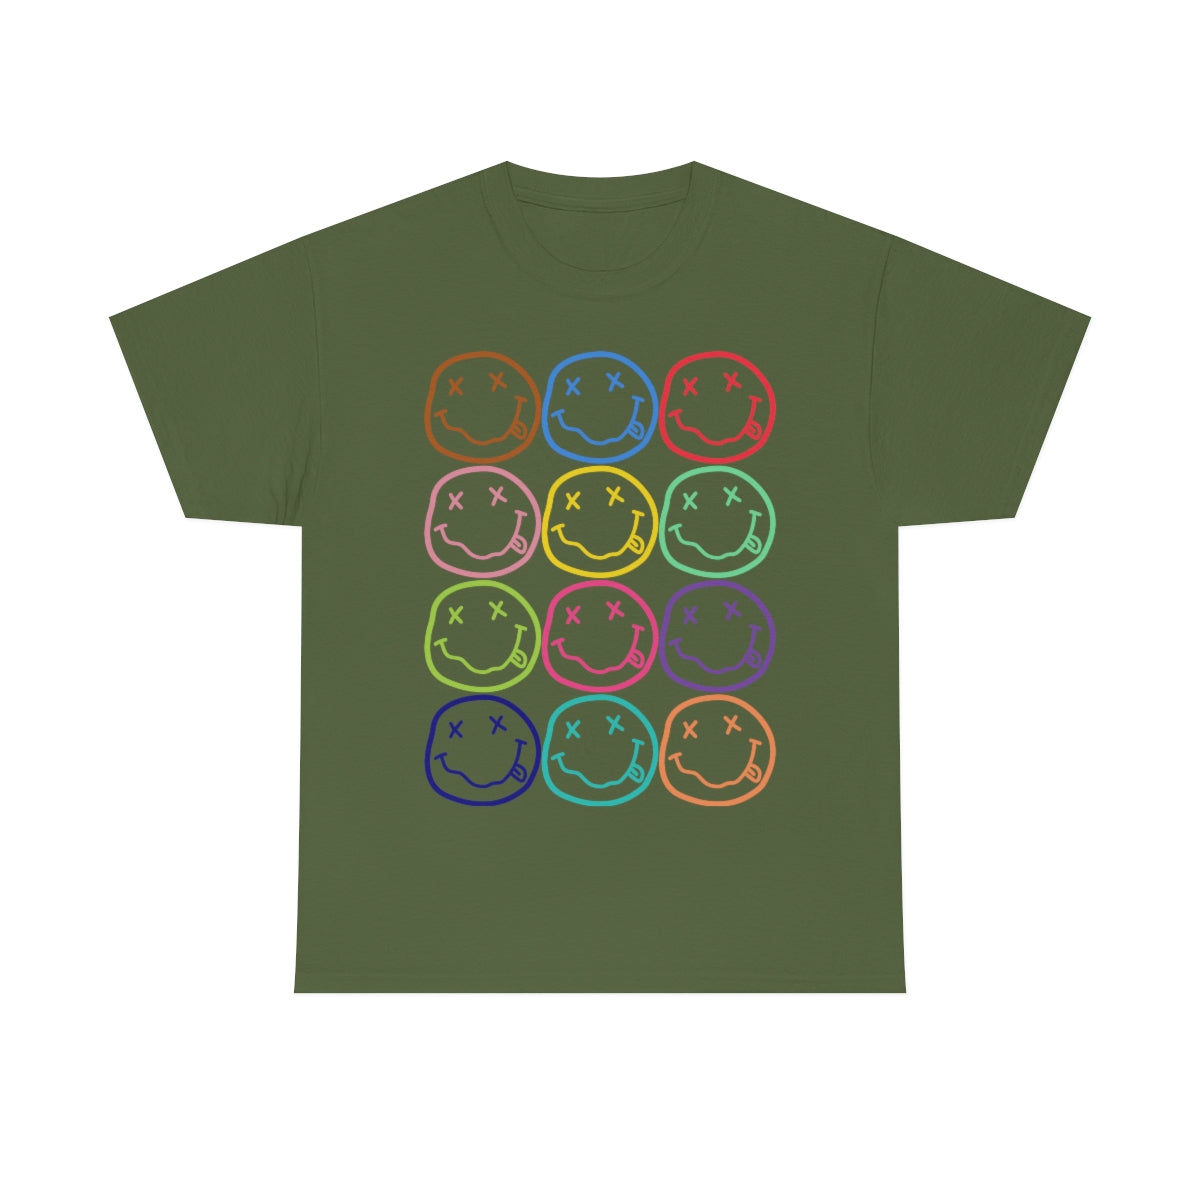 Nirvana Smiley Face T-shirt (Unisex Heavy Cotton Tee); Nirvana Rainbow Smiley Face Tee Shirt; Nirvana Pop Art; Nirvana Aesthetic Graphic Tshirt